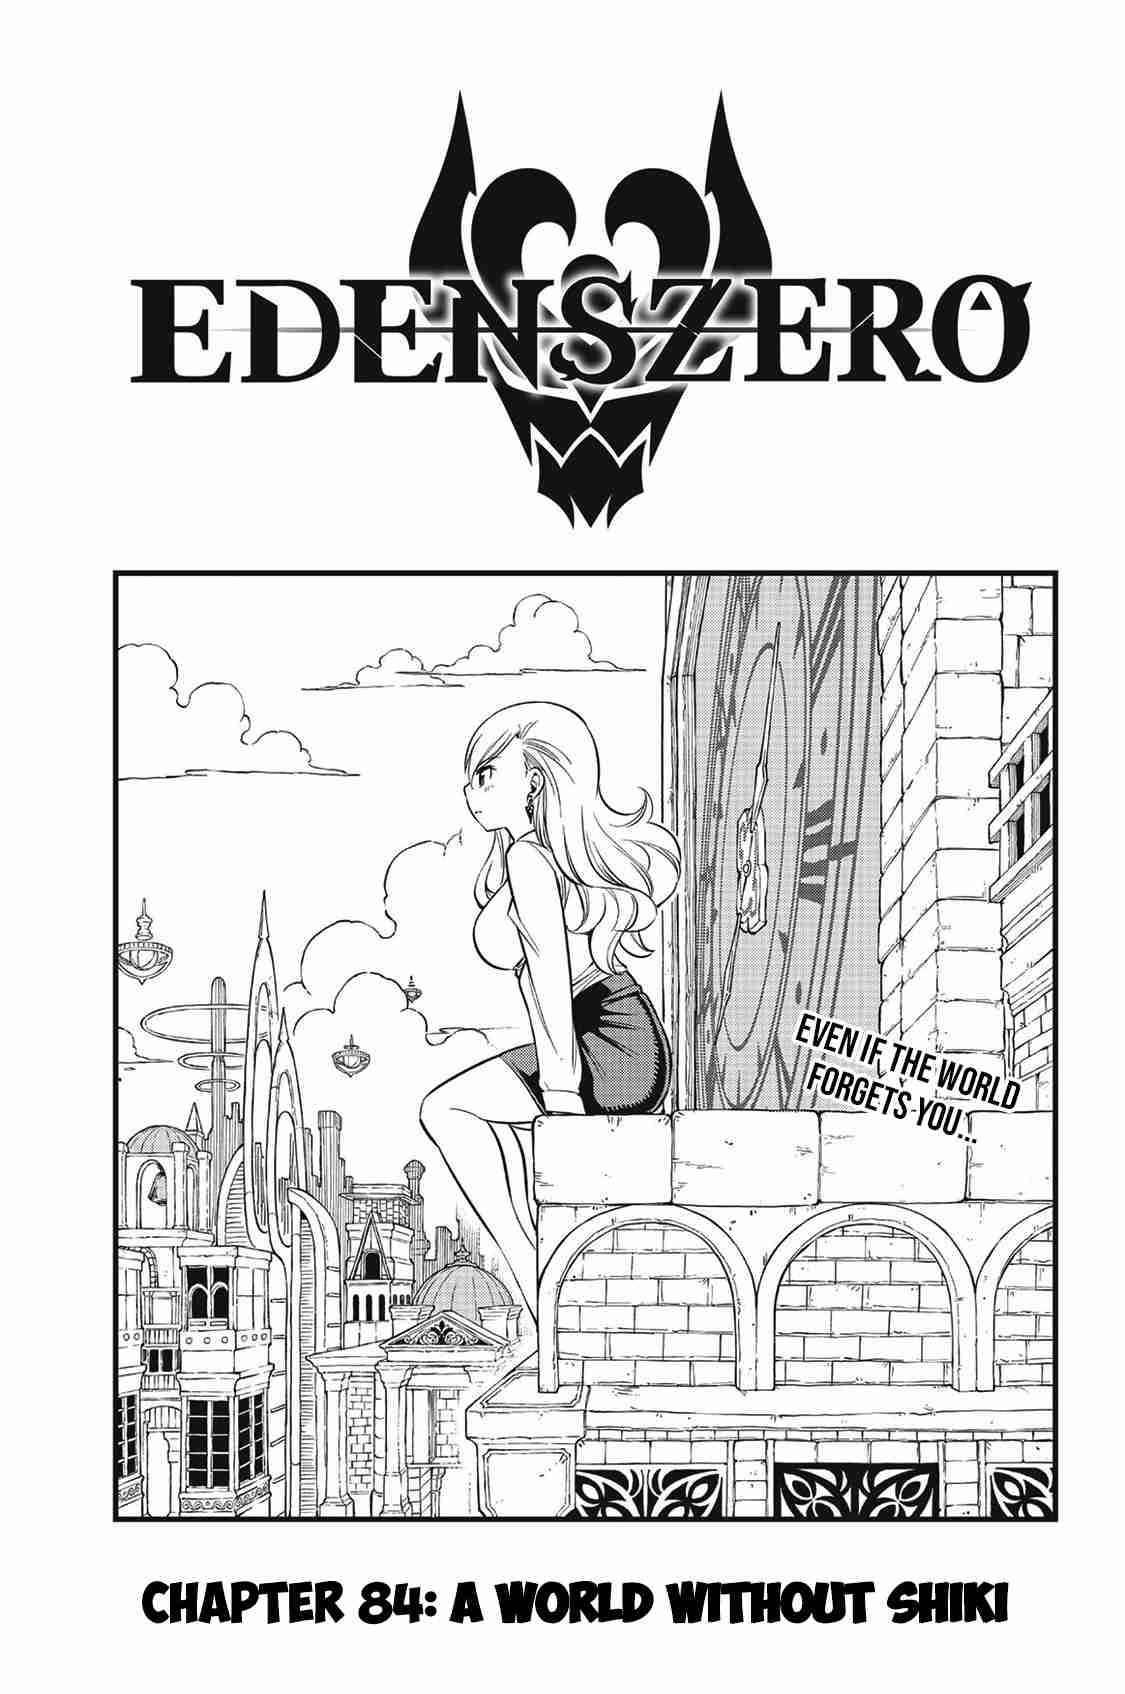 Edens Zero Ch. 84 A World Without Shiki